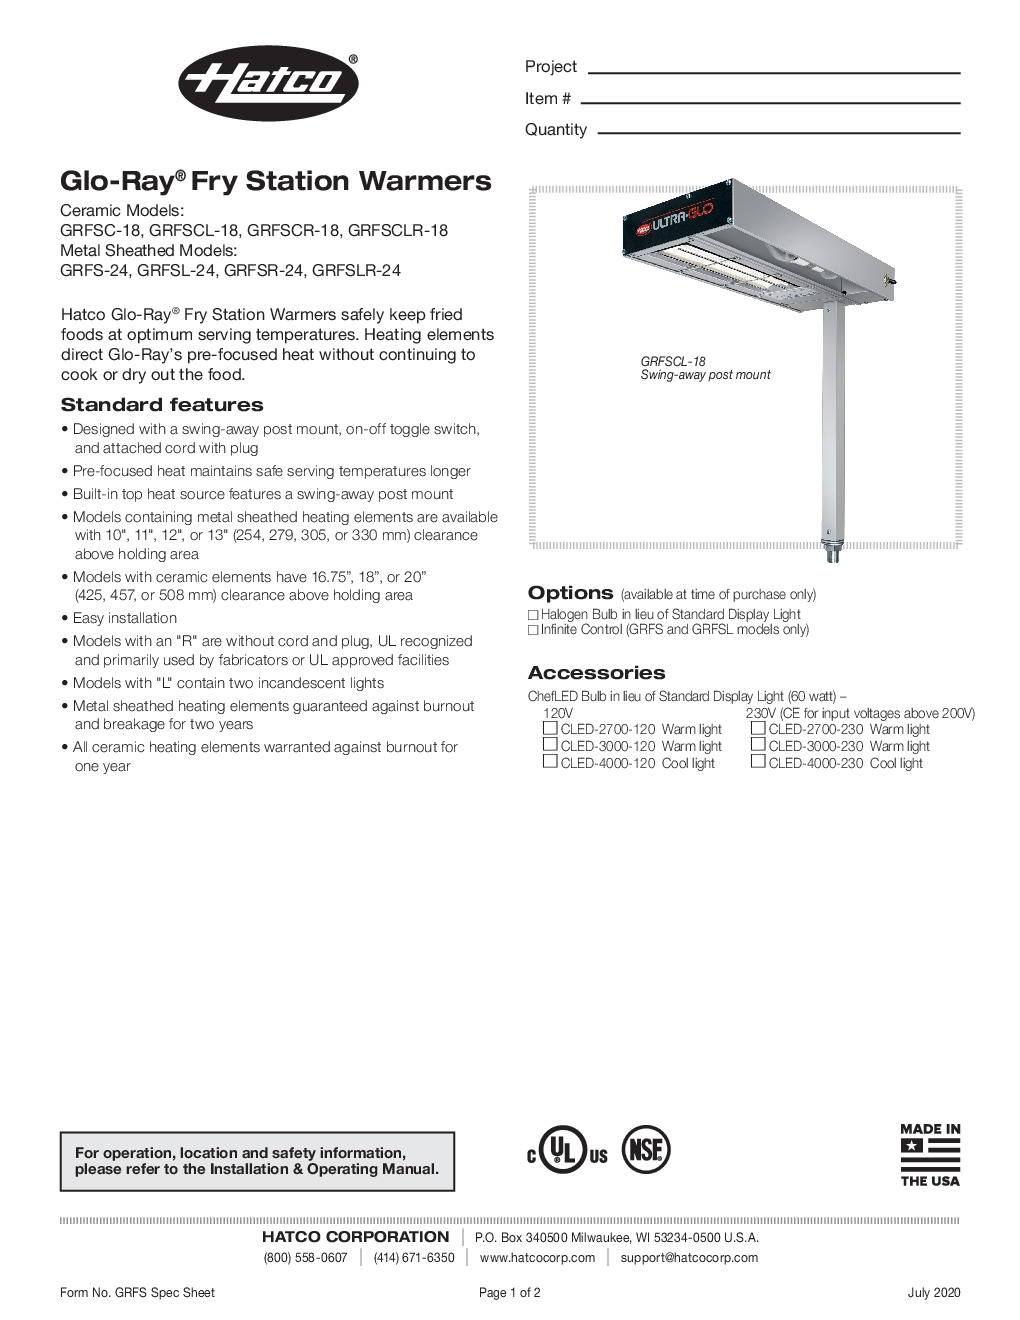 Hatco GRFS/R-24 Glo-Ray Fry Station Warmers, Metal Sheathed